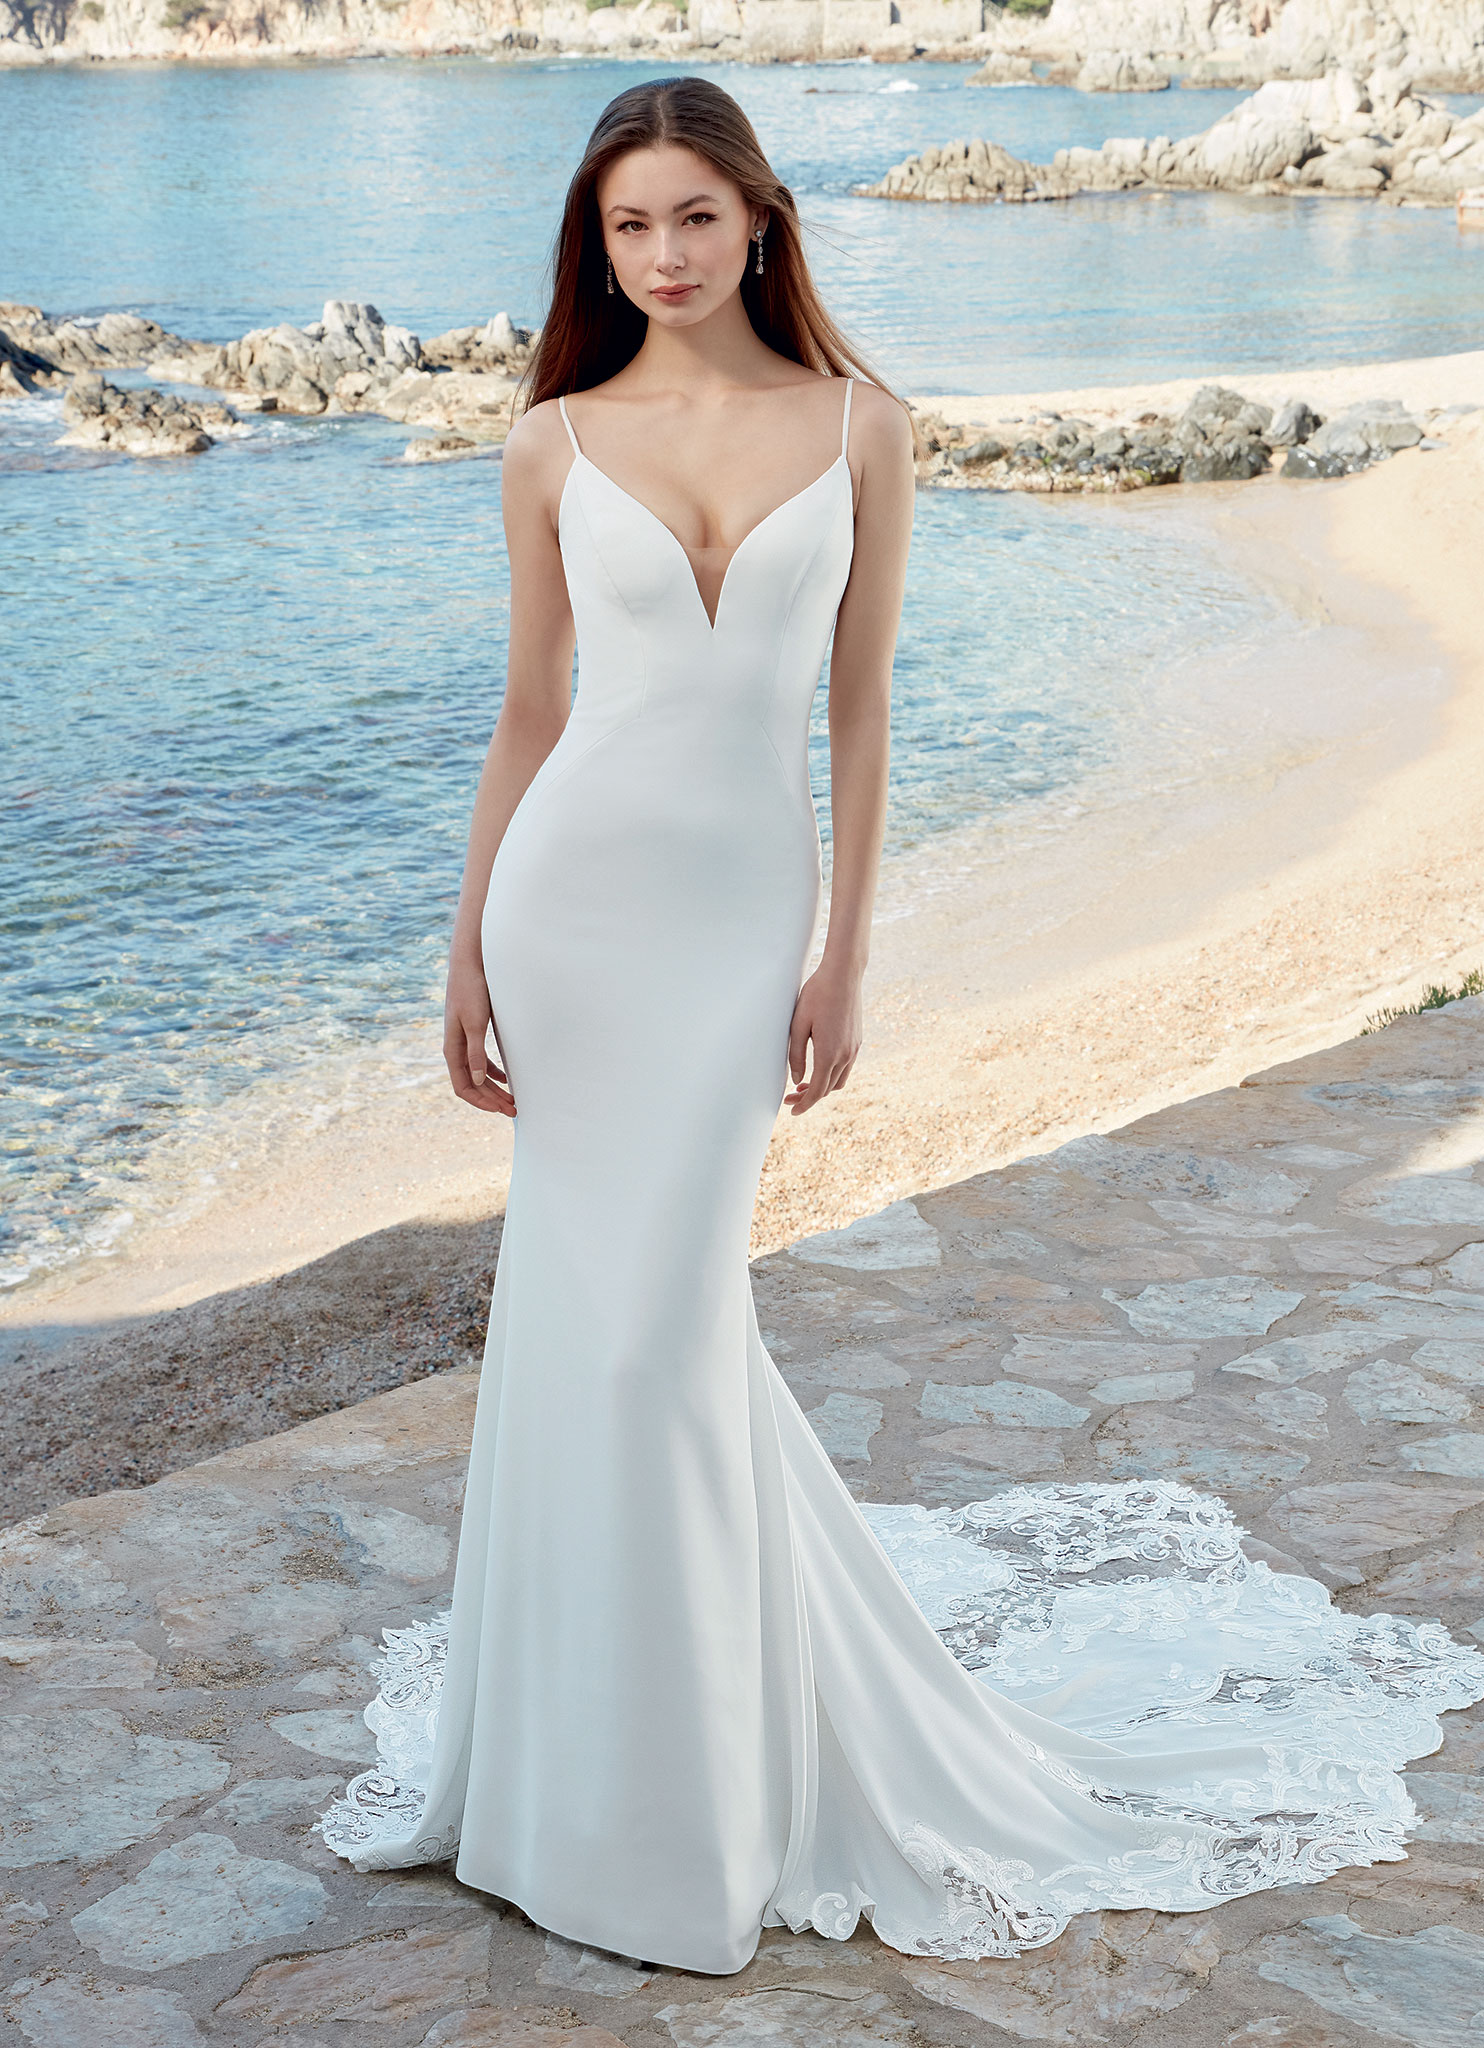 Alanis wedding dress by Enzoani